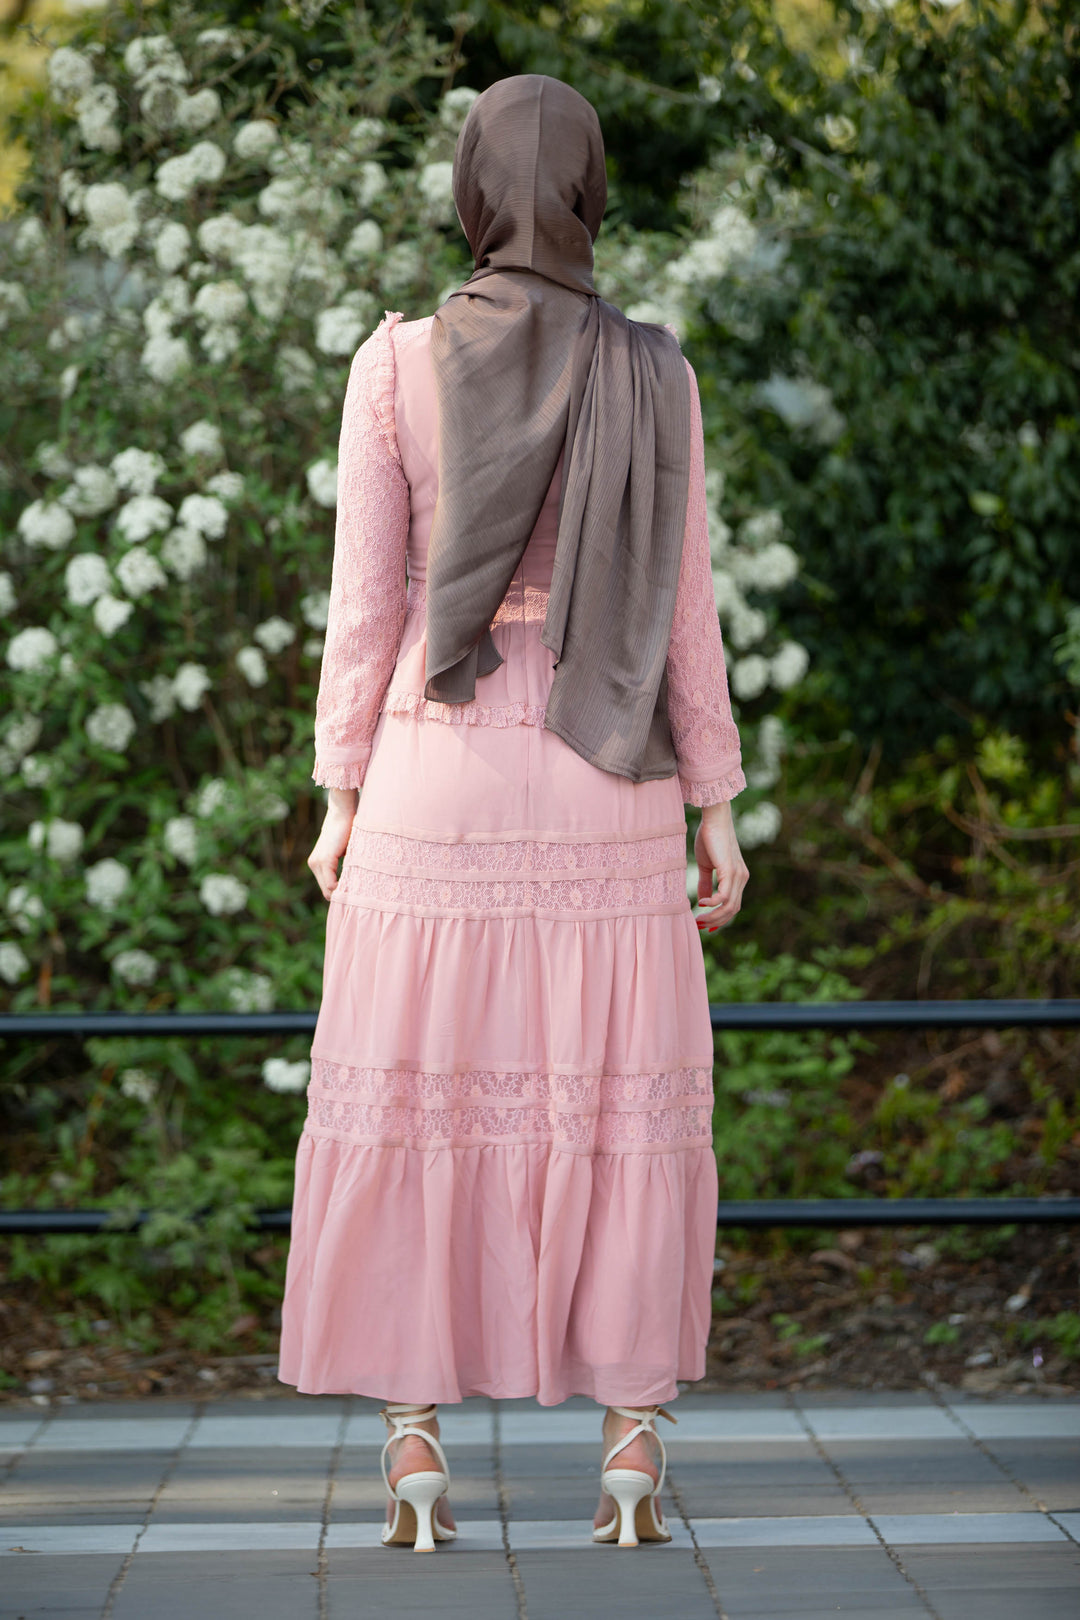 a woman wearing a hijab and a pink dress